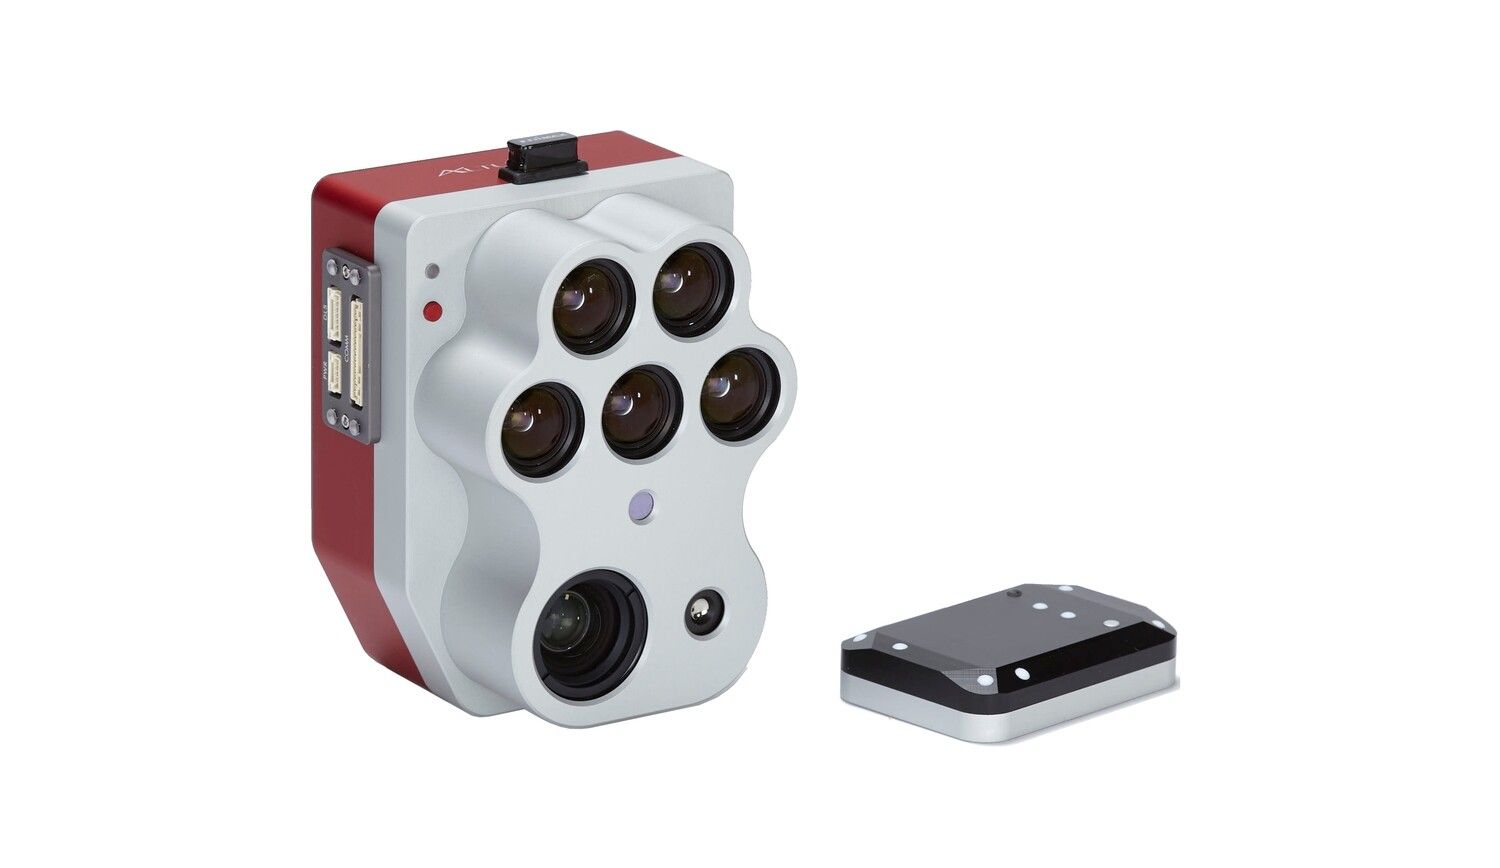 Micasense Altum-PT Multispectral & Thermal Camera Kit